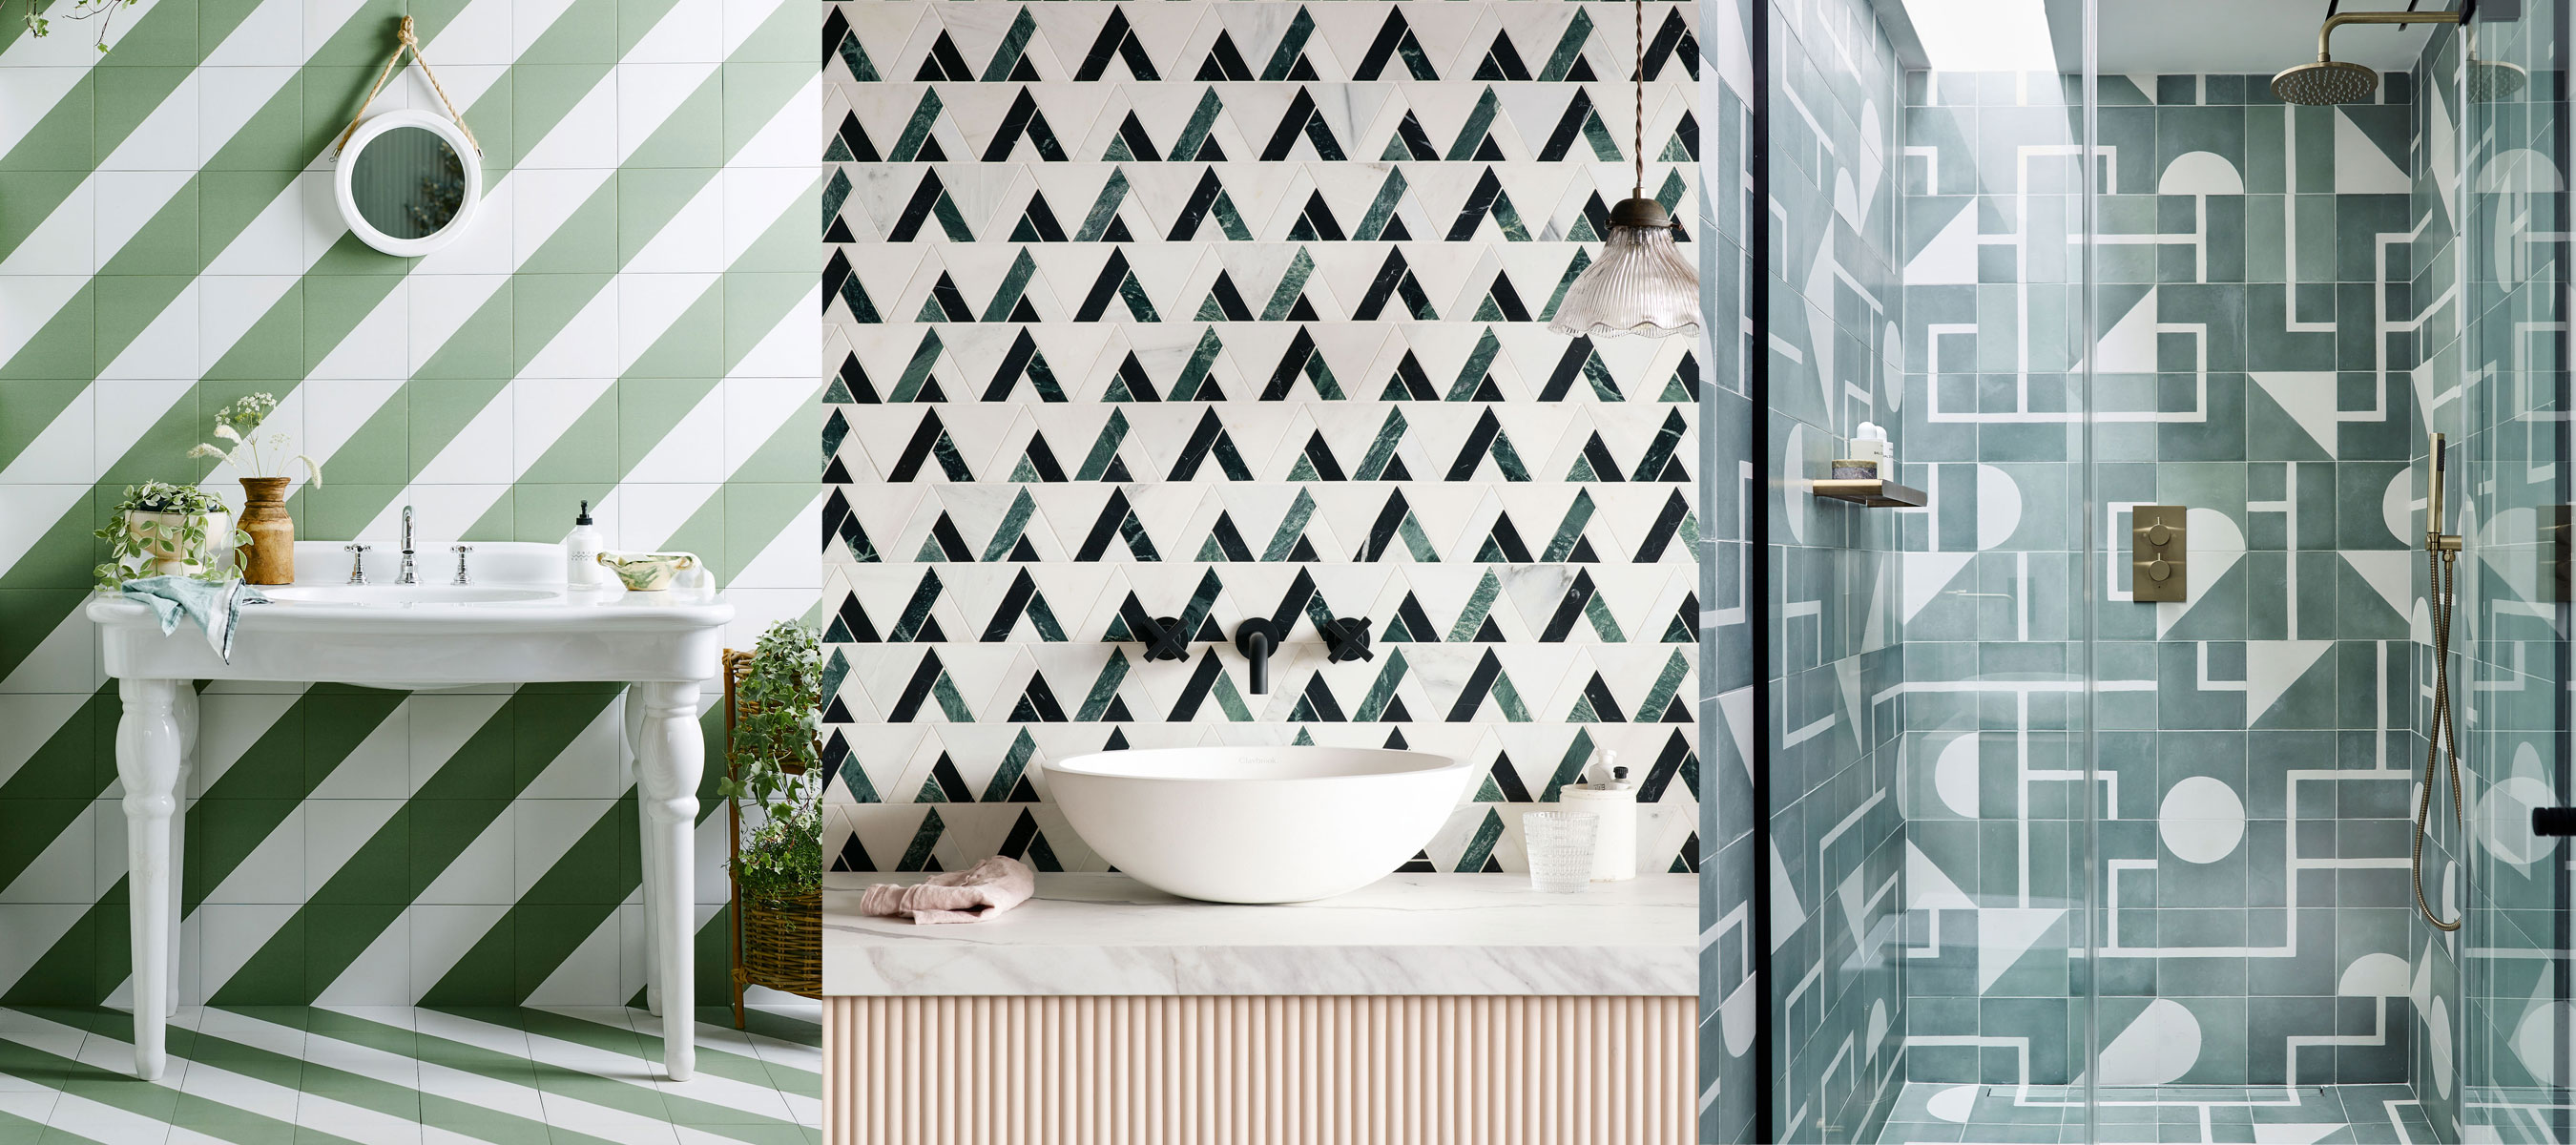 Bathroom tile ideas 18 designs inspired by bathroom tiles   Homes ...